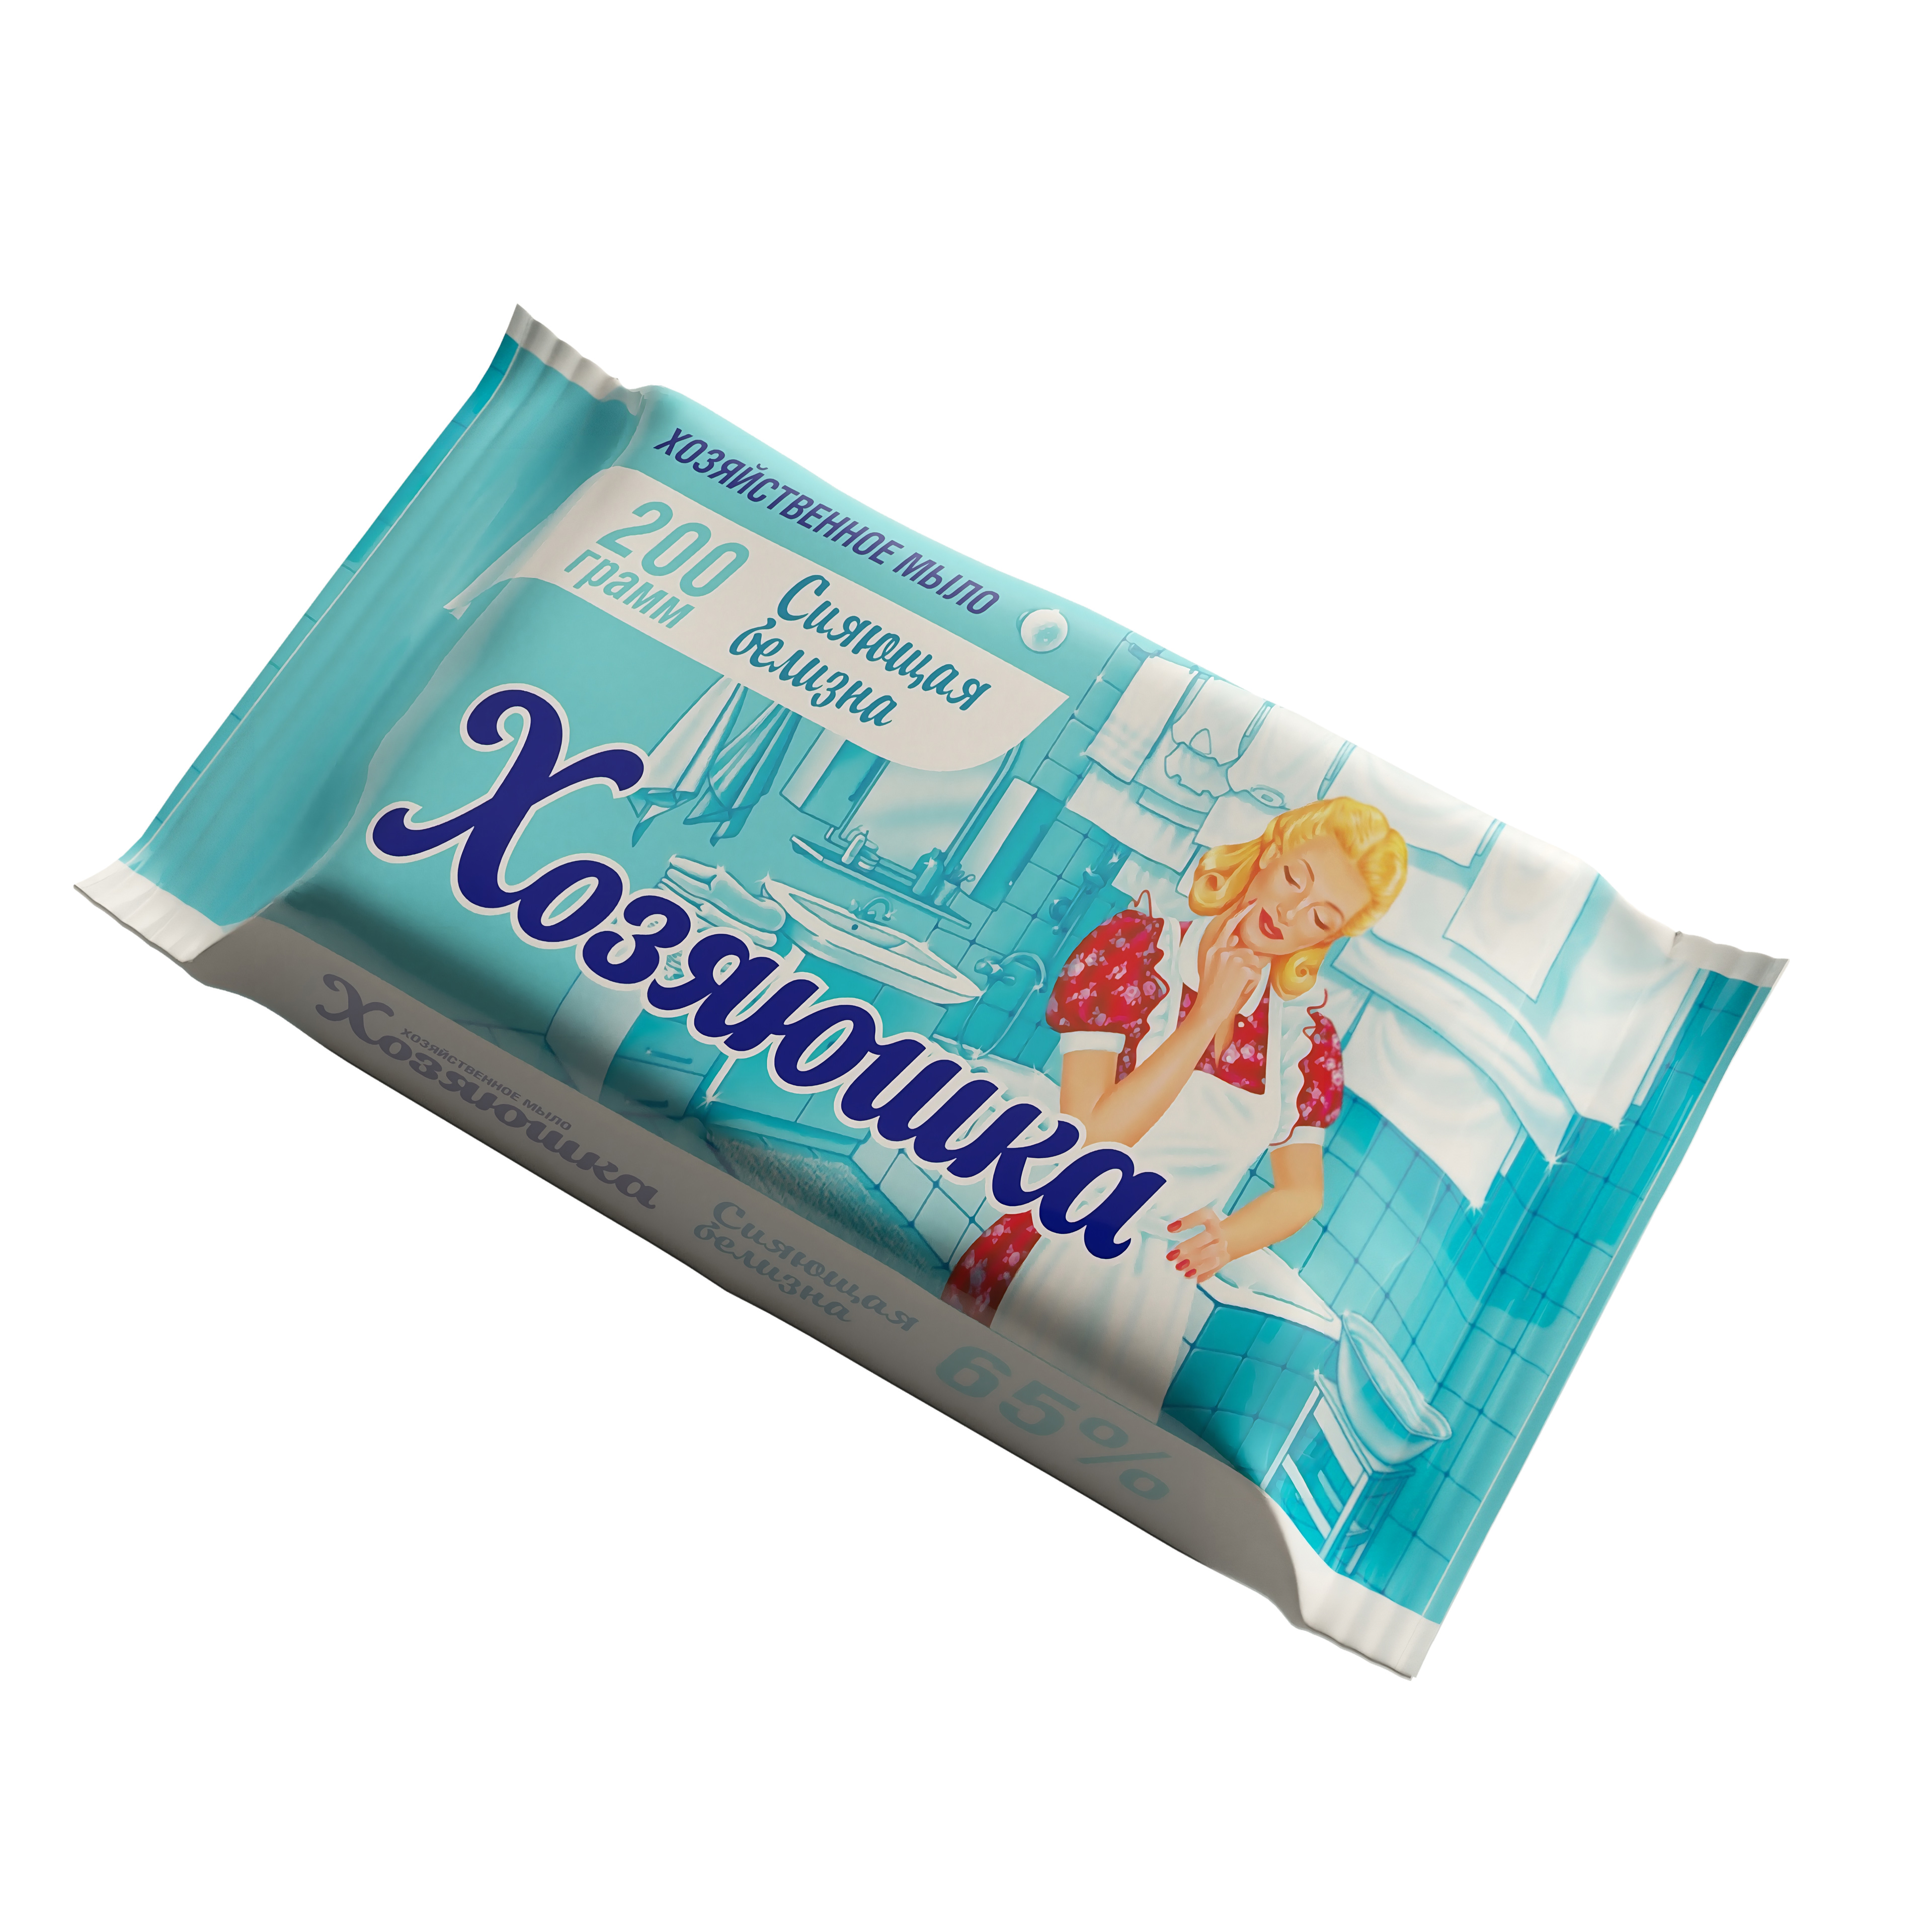 Laundry soap Hozyayushka 65% shining whiteness in bulk